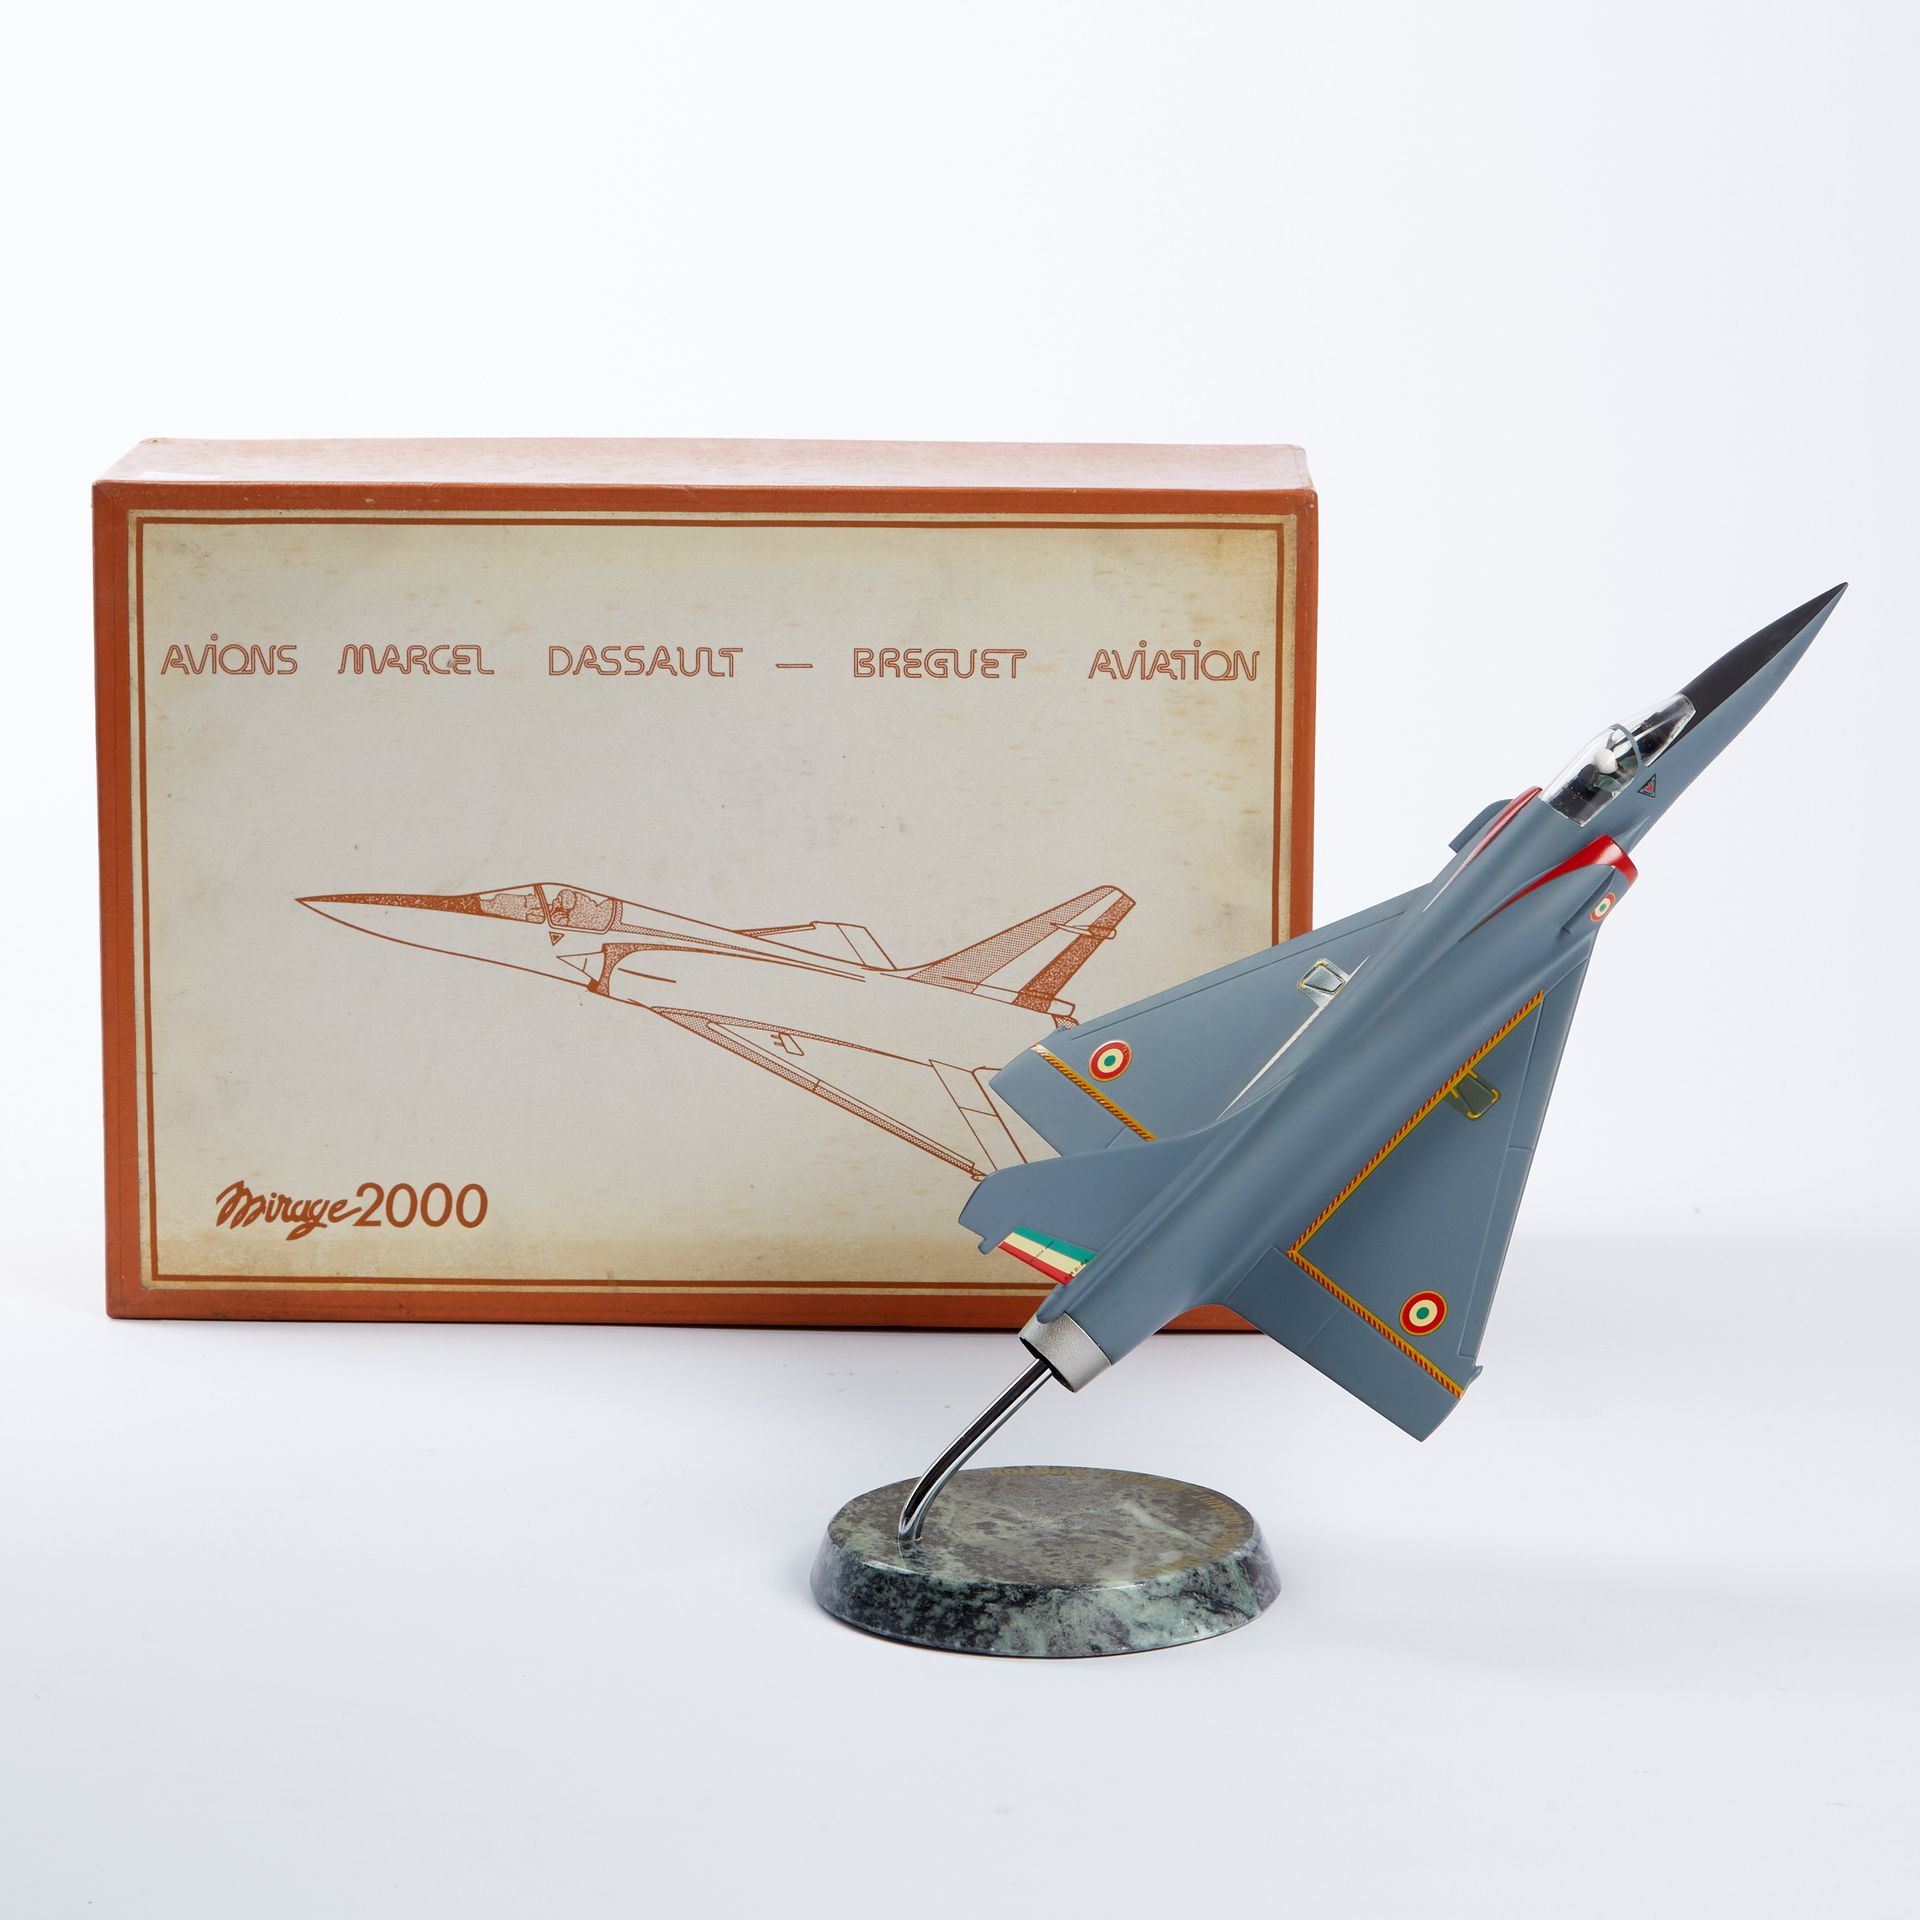 Null 马塞尔-达索航空公司 - 宝玑航空。
1:48 的幻影 2000 模型，采用涂漆树脂和大理石底座，具有法国军队的颜色。
制造商标记 "La maque&hellip;